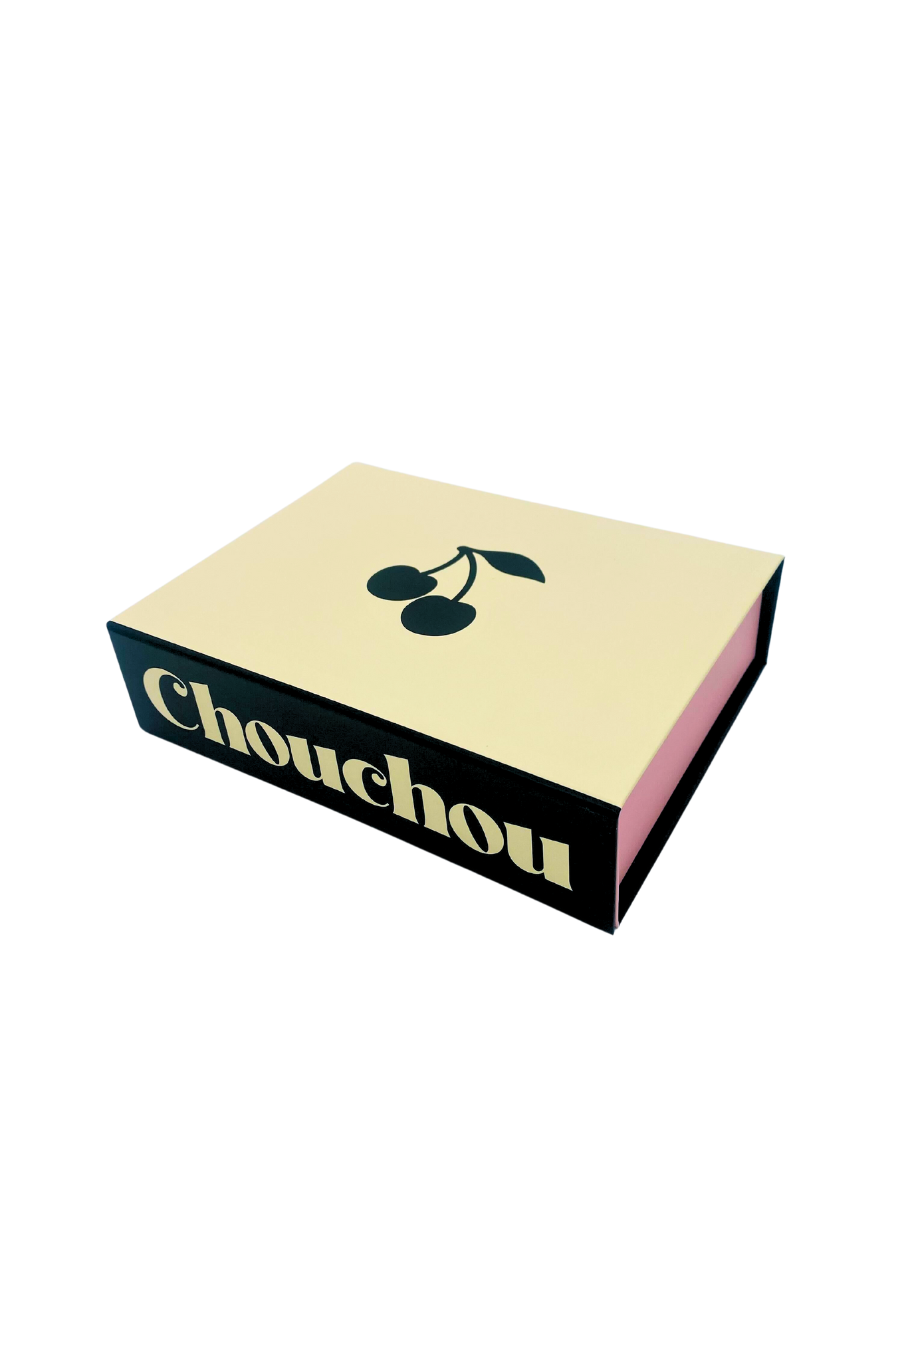 Chouchou Gift Box